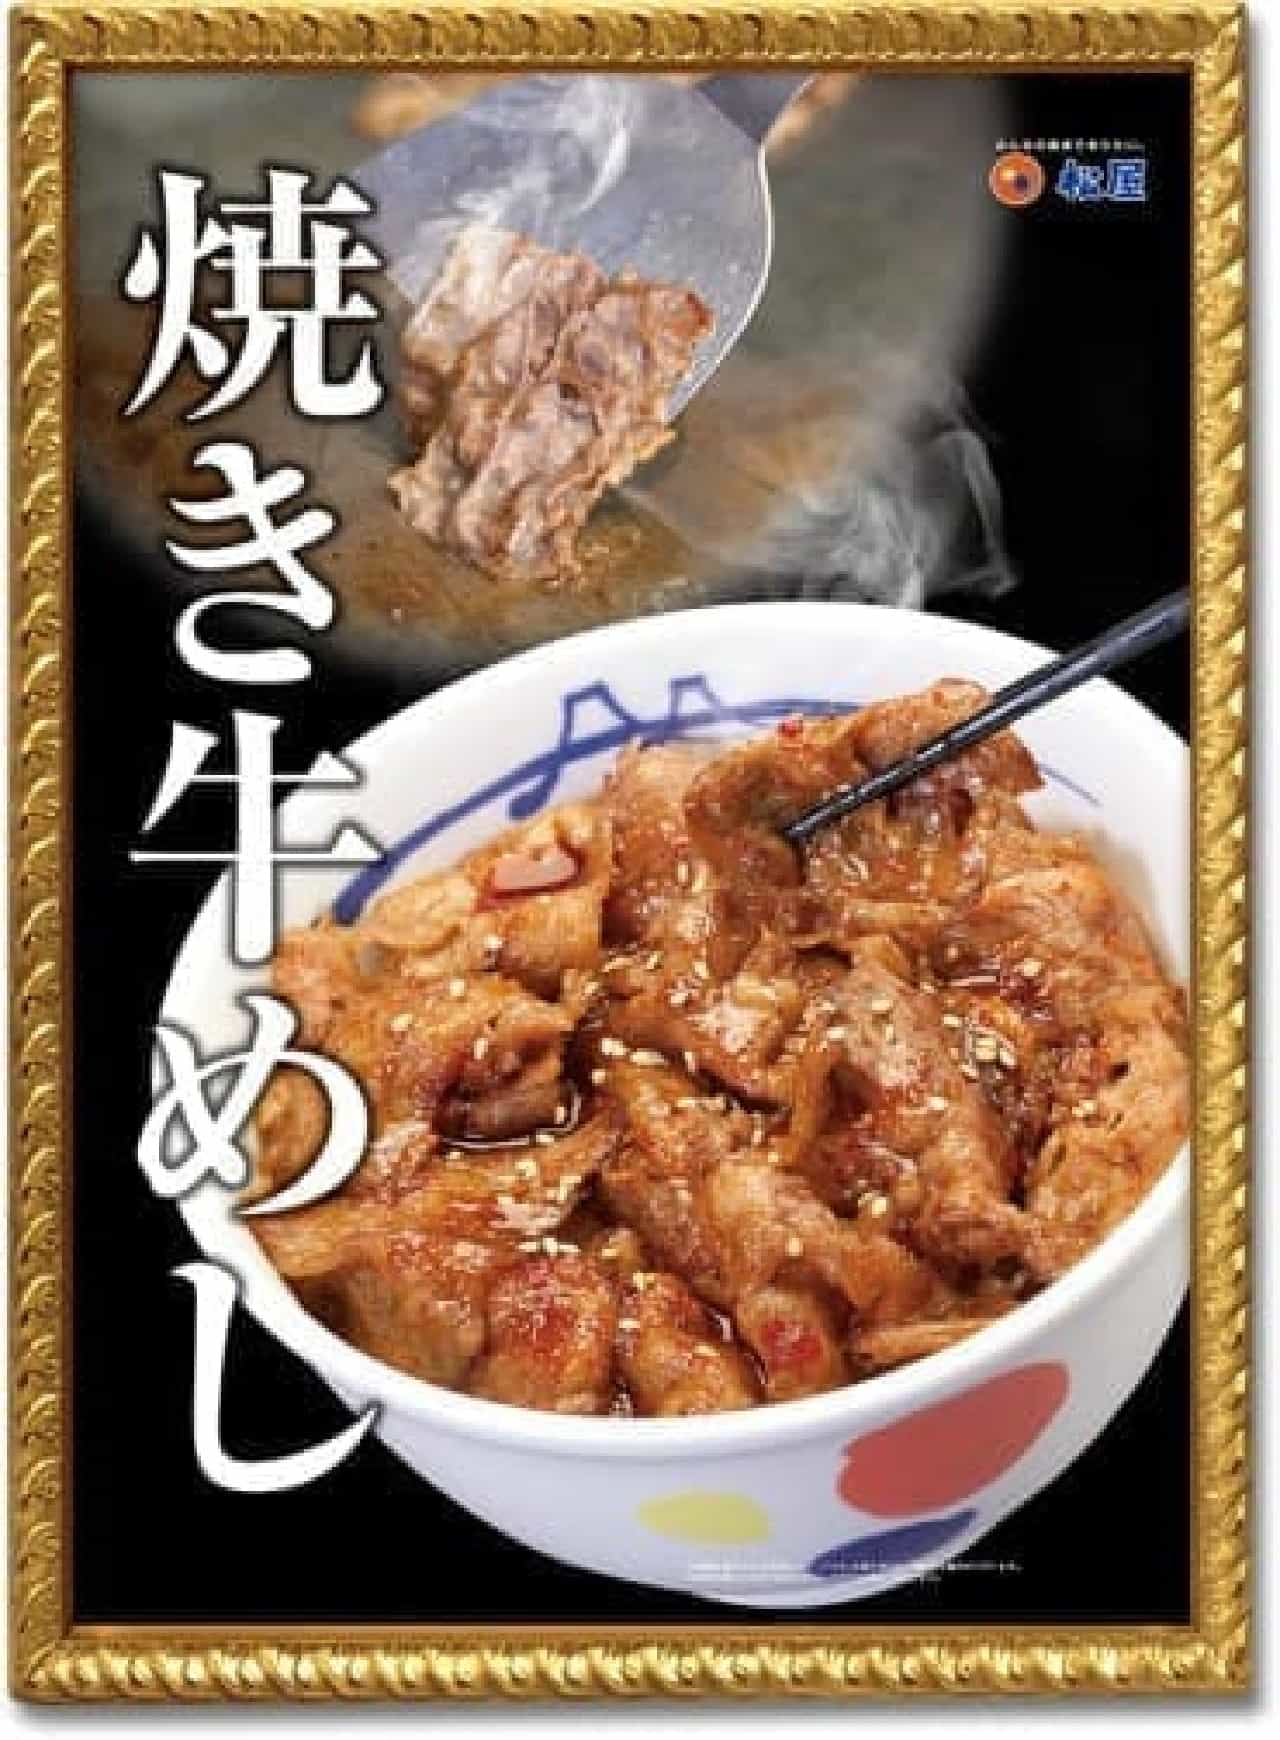 Matsuya "Grilled beef rice"